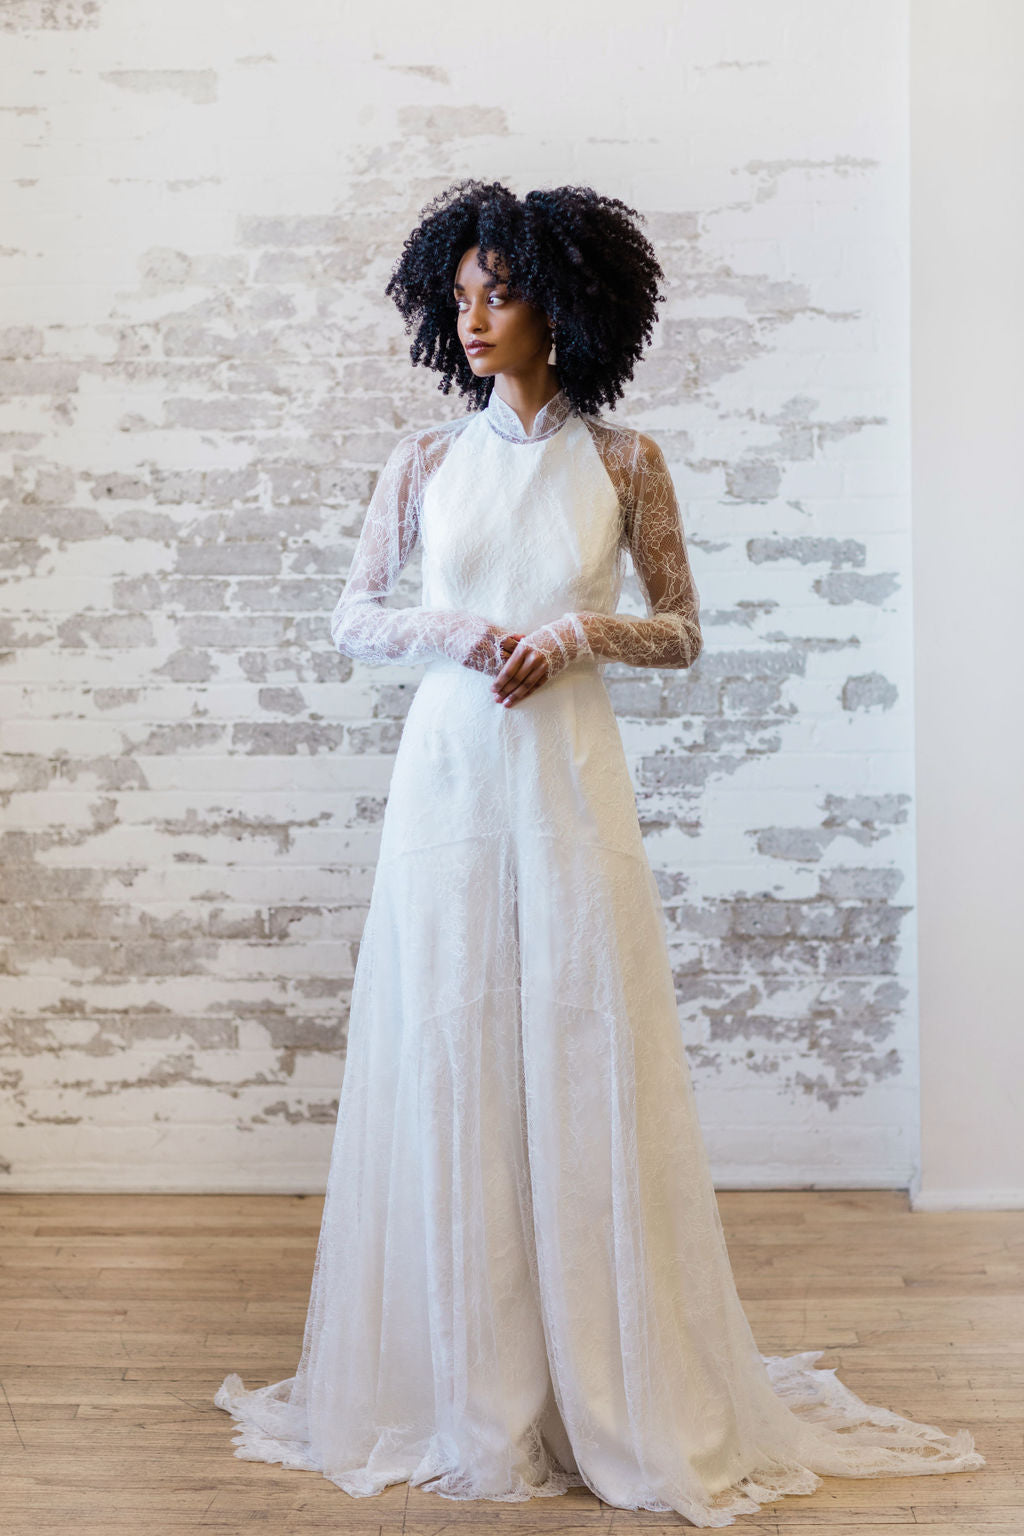 Sheer lace wedding dress overlay. Made in Toronto,Canada.